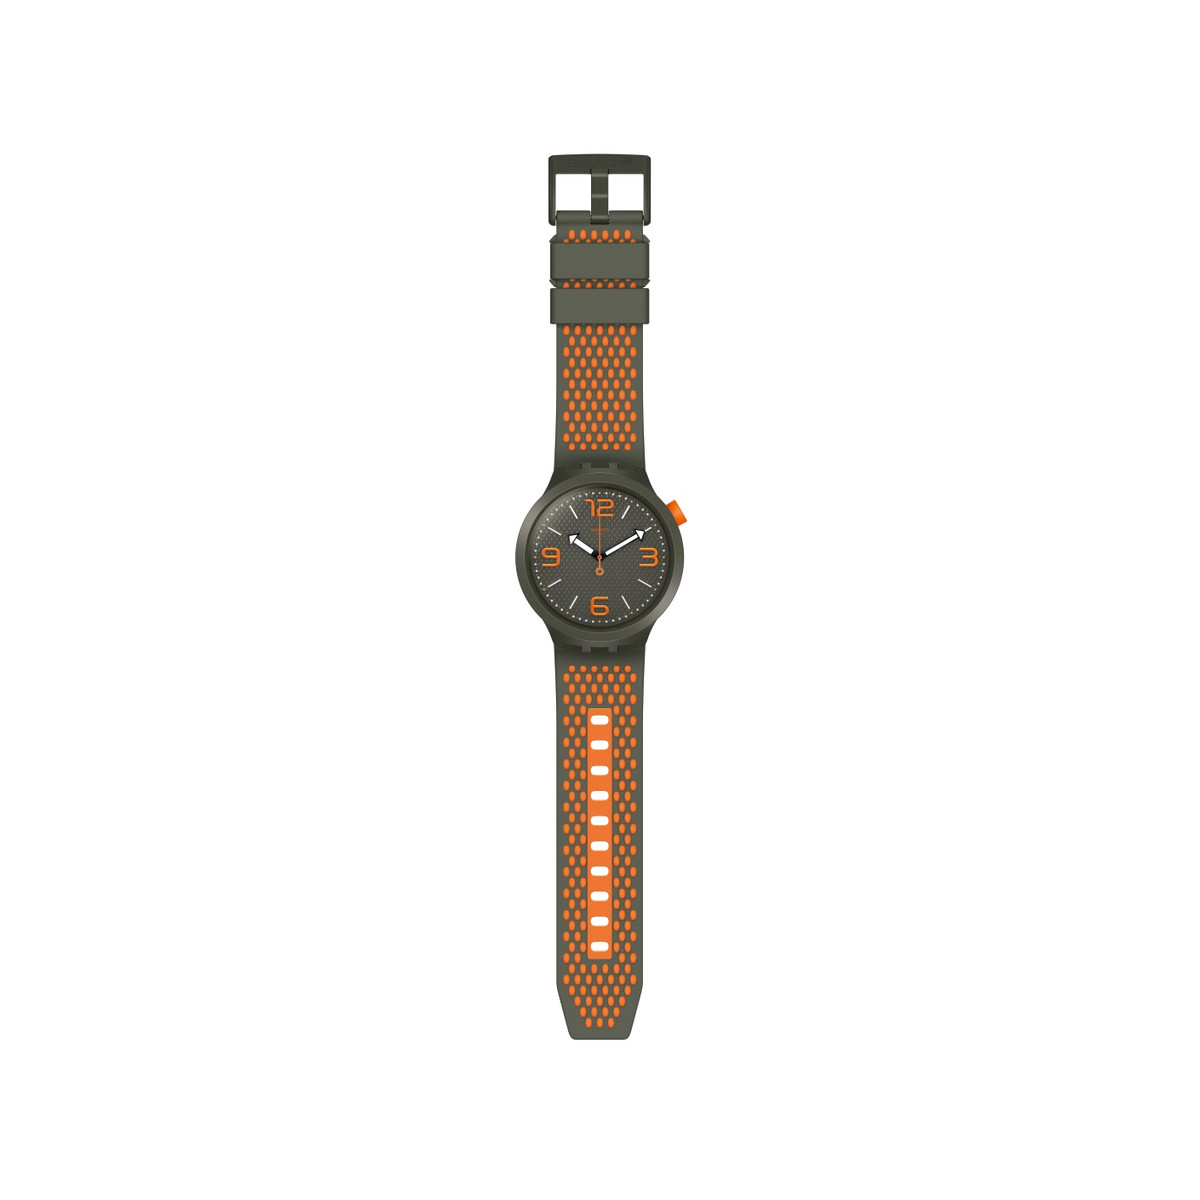 Montre Swatch mixte plastique silicone kaki orange - vue 2